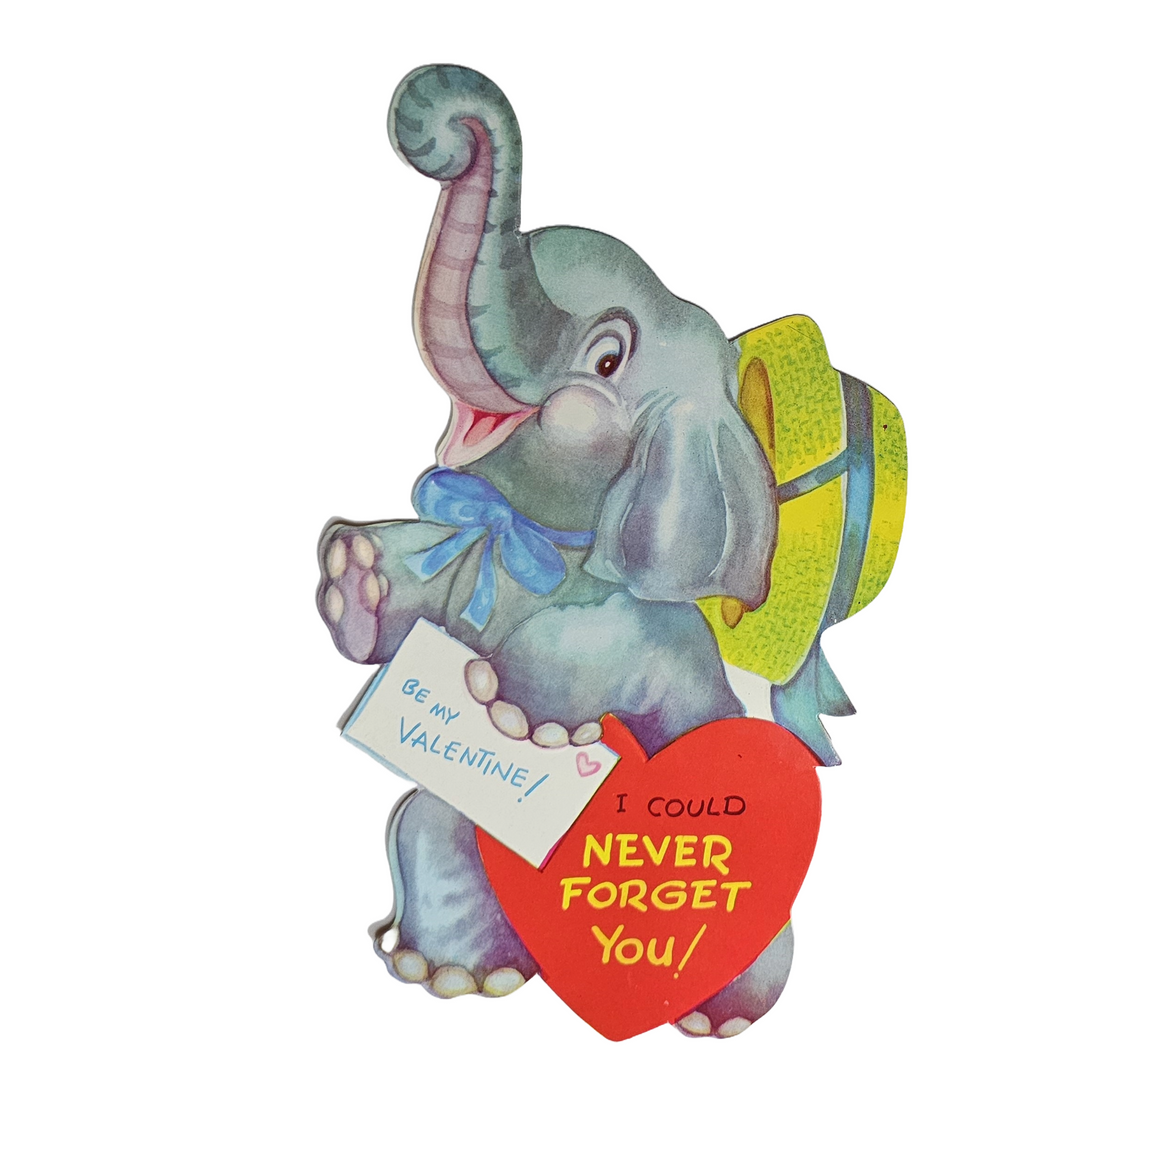 Vintage Die Cut Valentine Card Elephant Wearing Hat Holding Letter